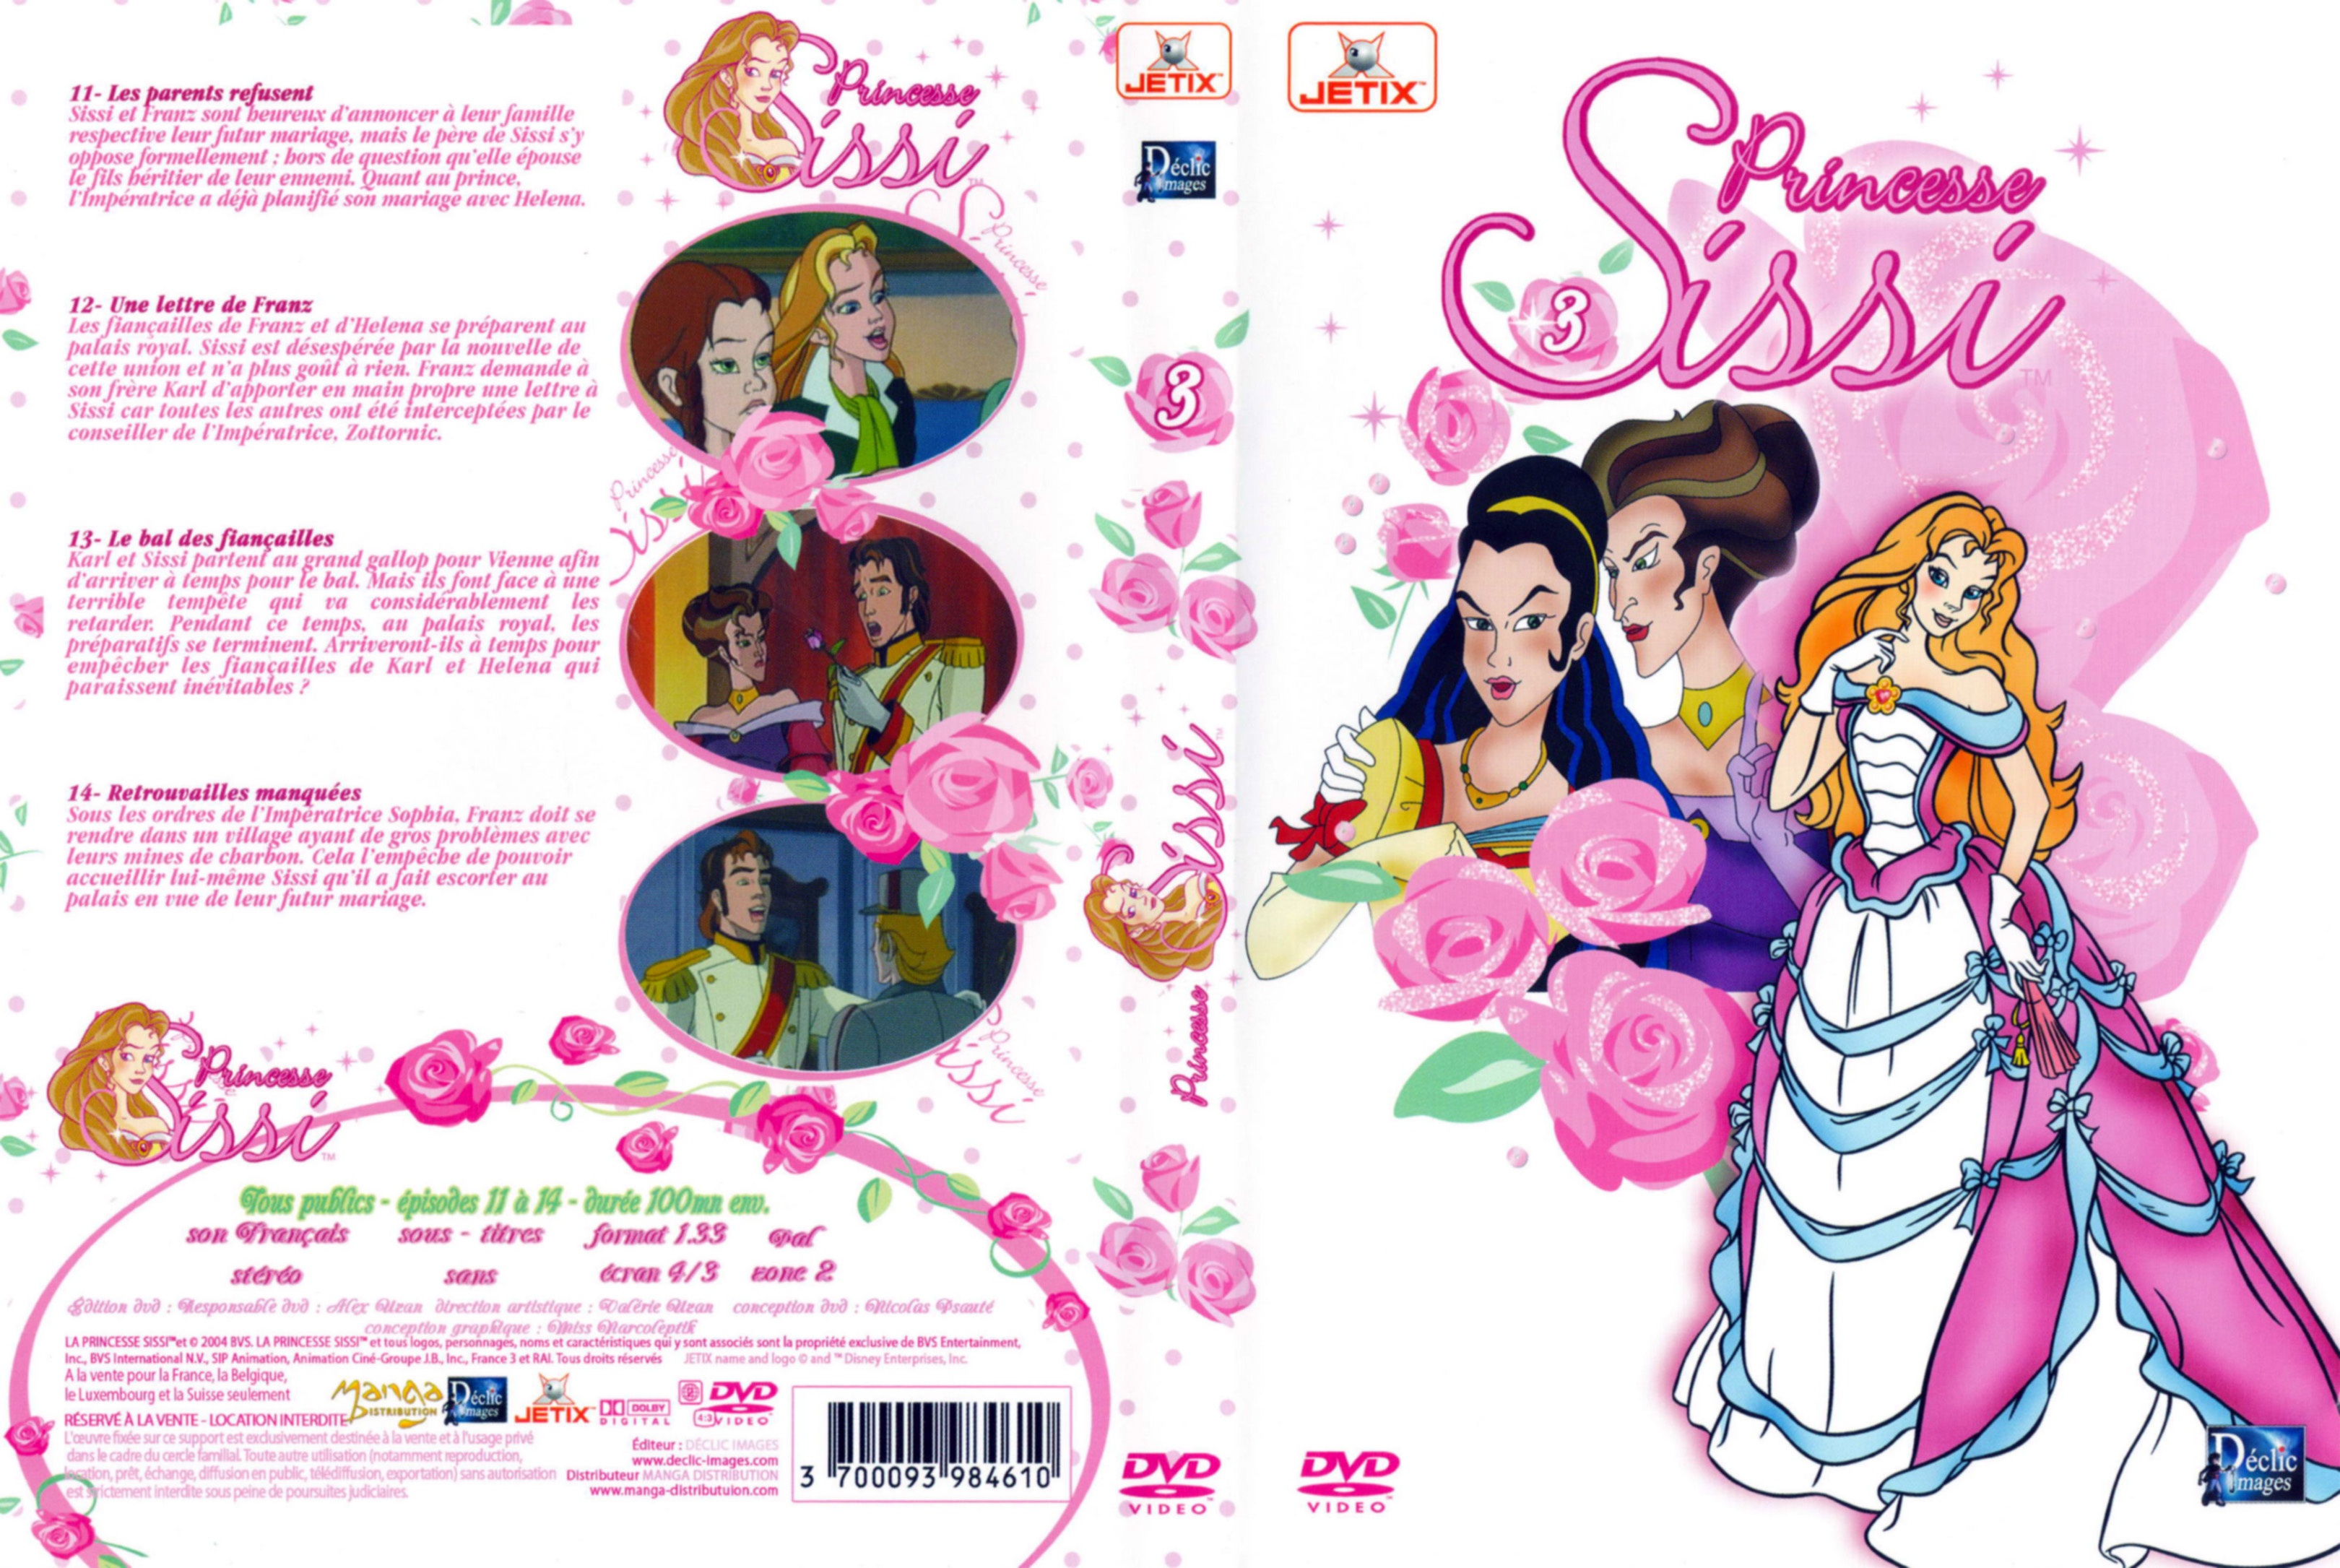 Jaquette DVD Princesse Sissi vol 3